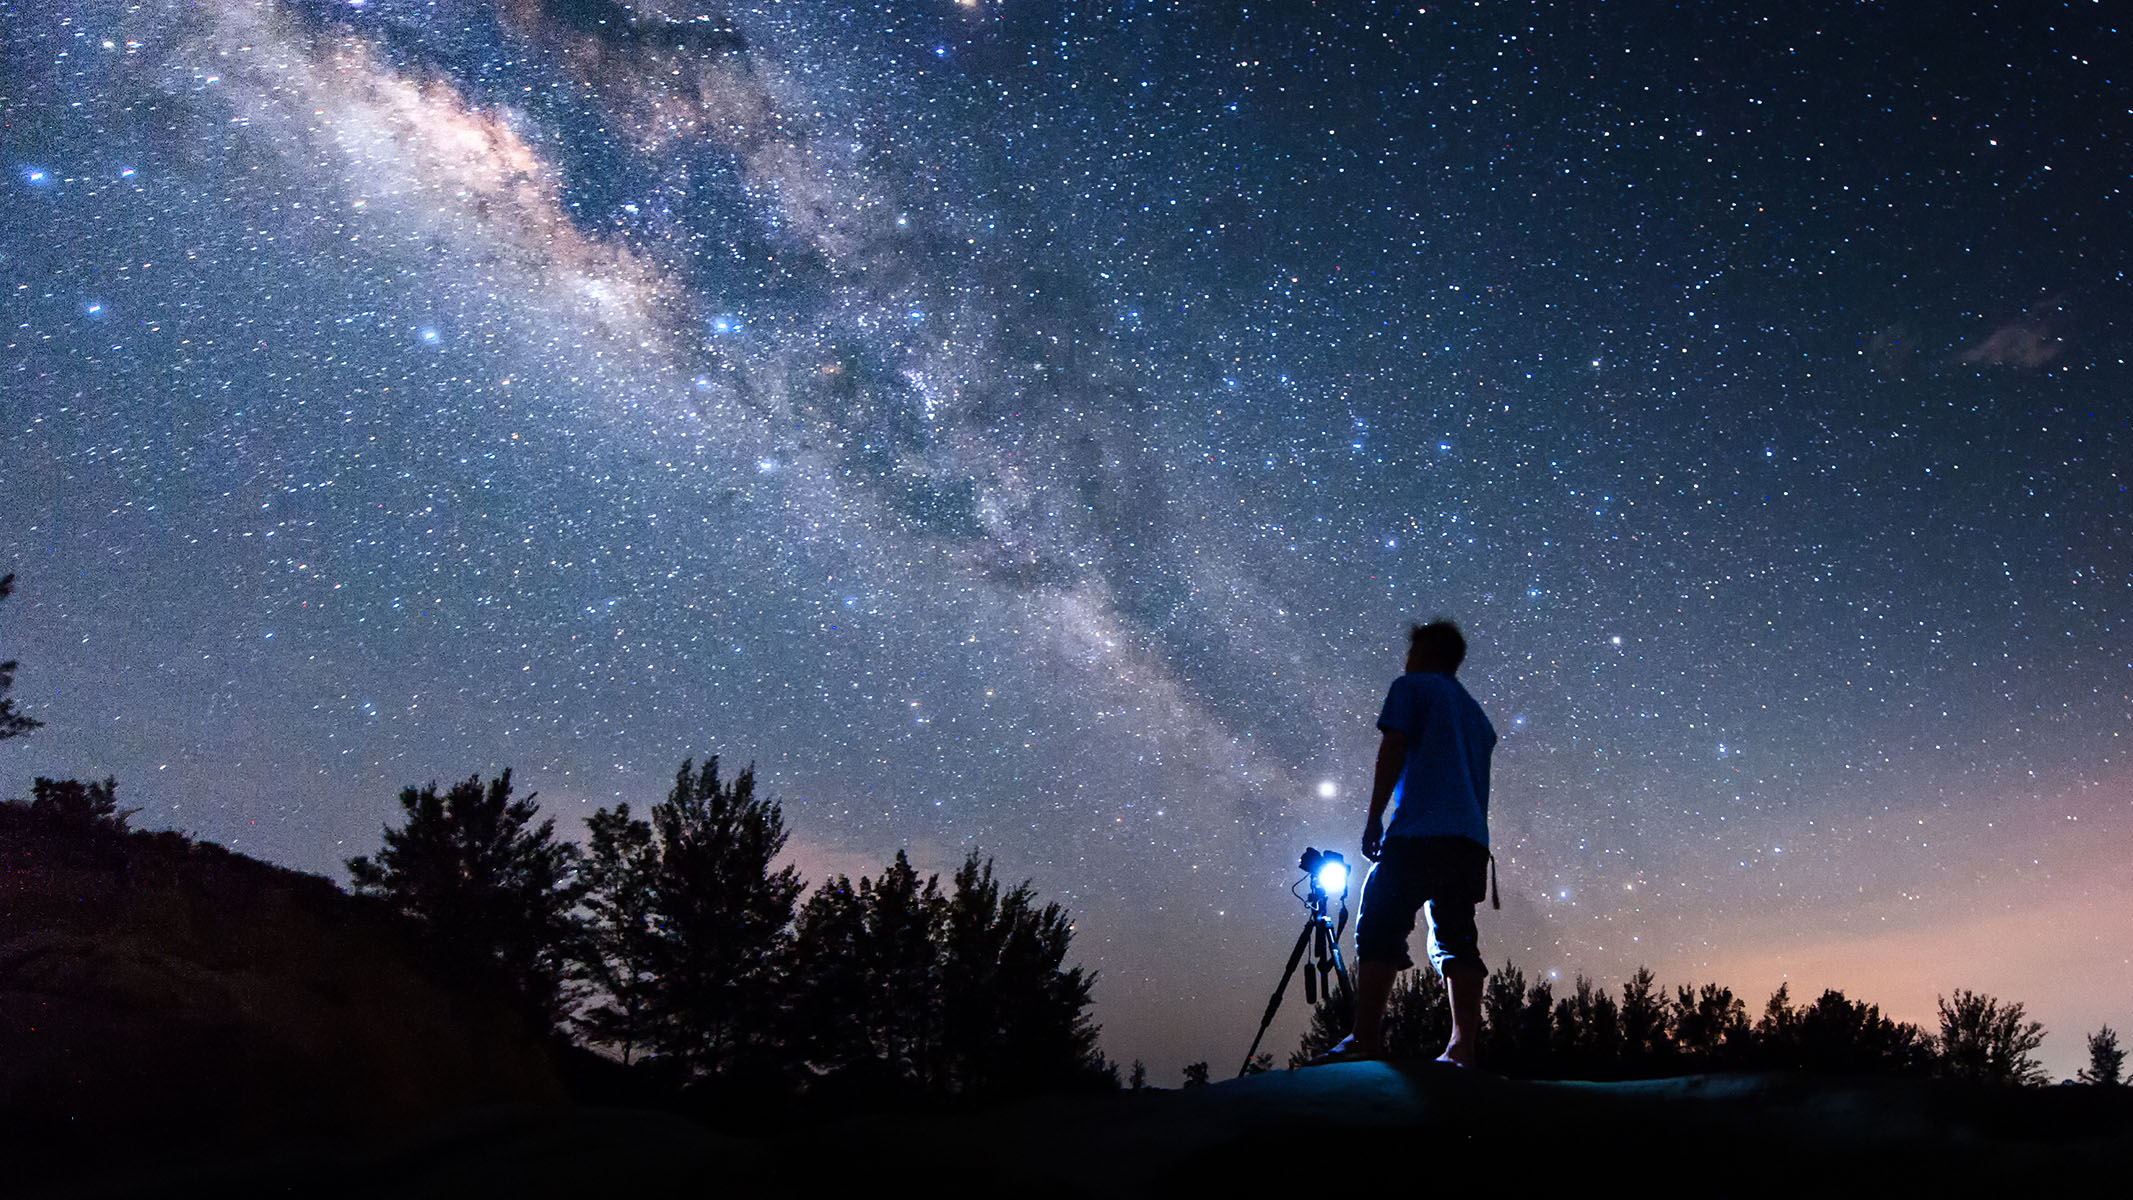 Photographer using camera on tripod under night sky